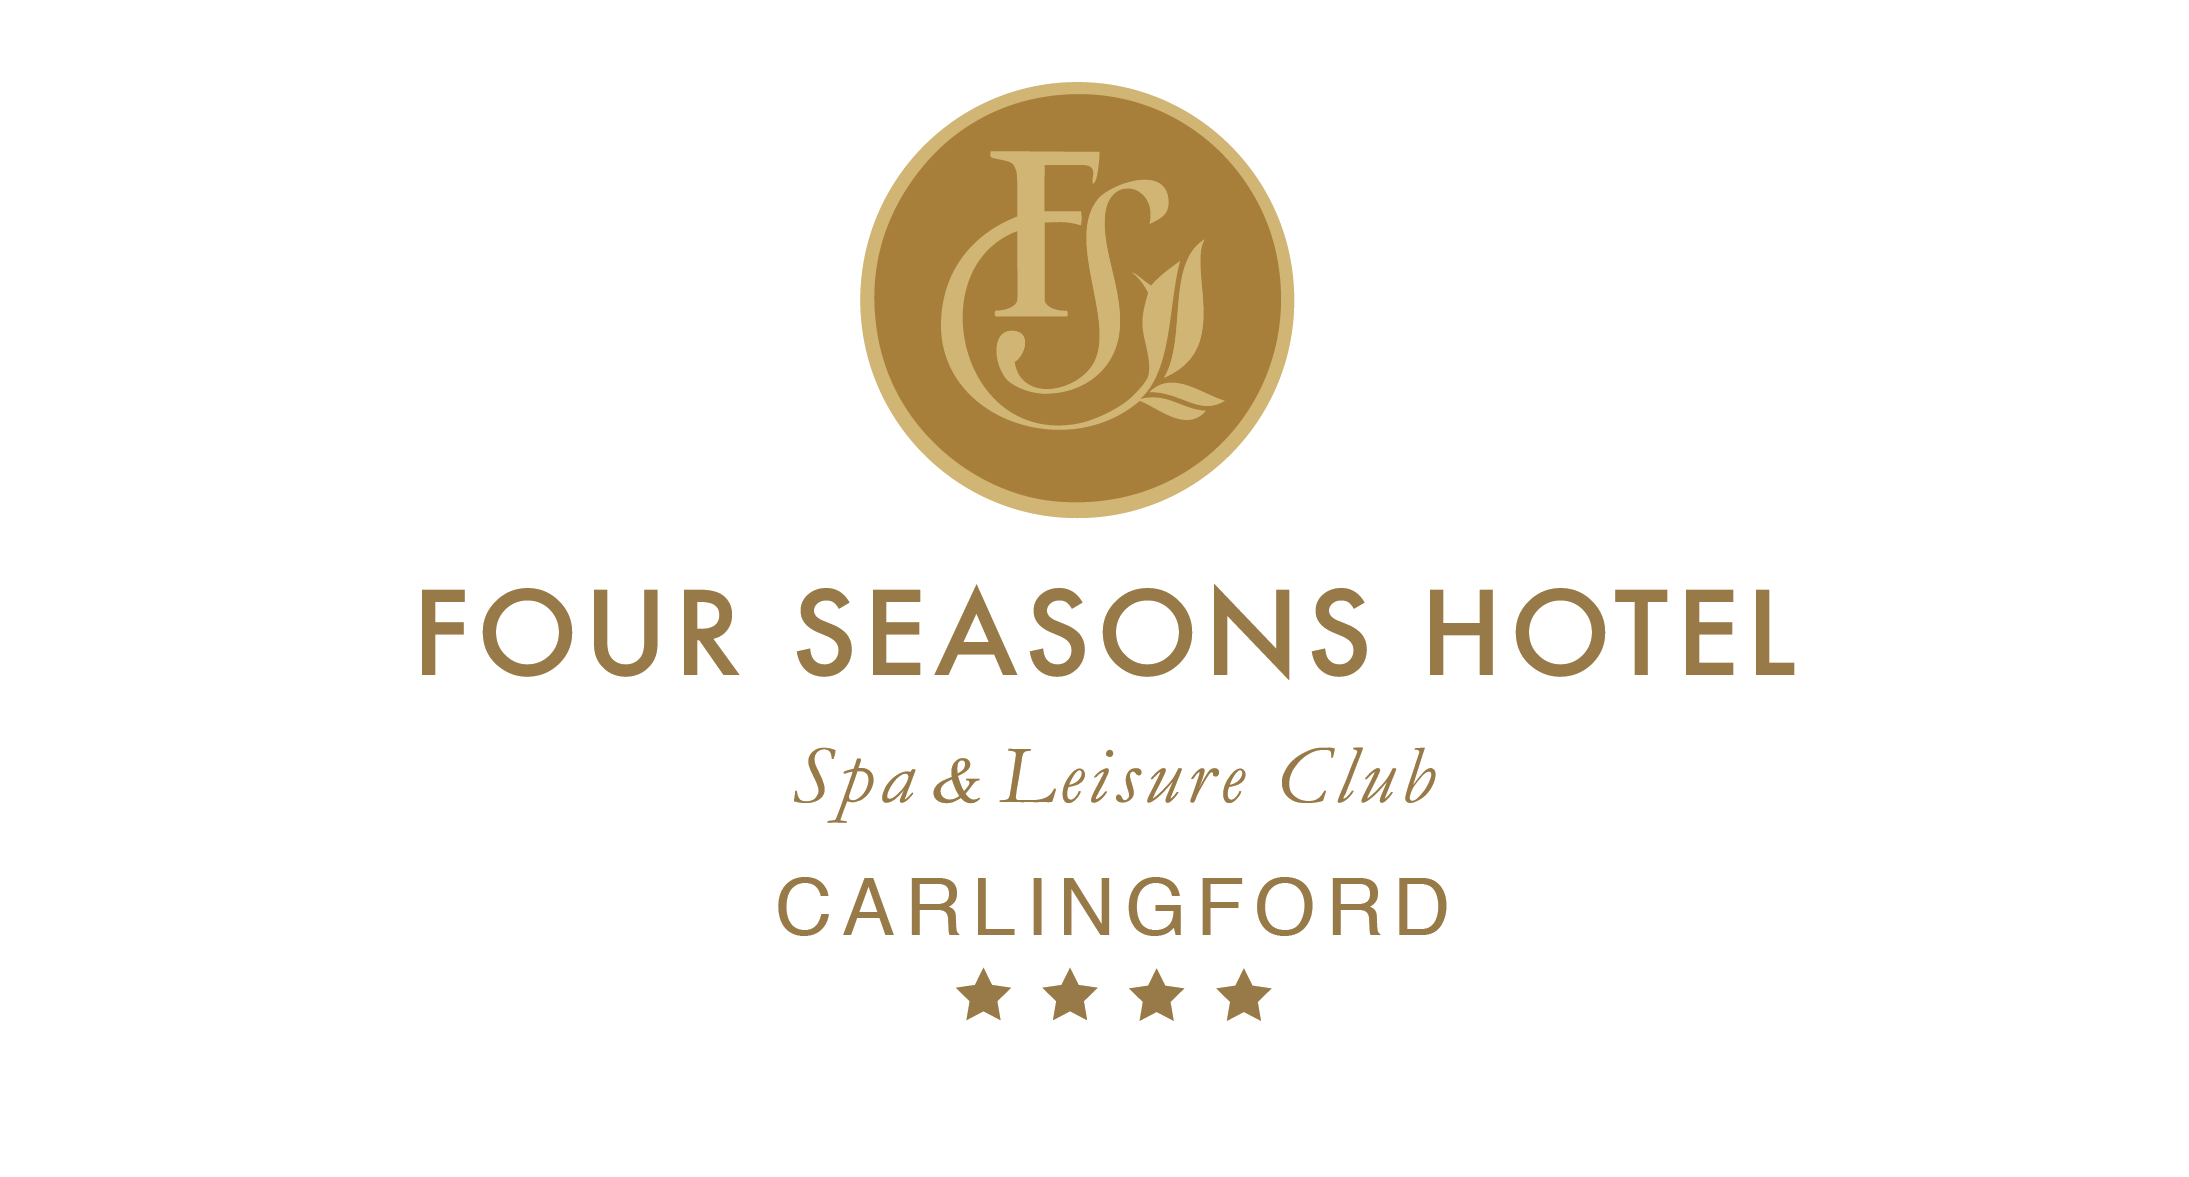 Four Seasons Hotel, Spa & Leisure Club, Carlingford Logo 1